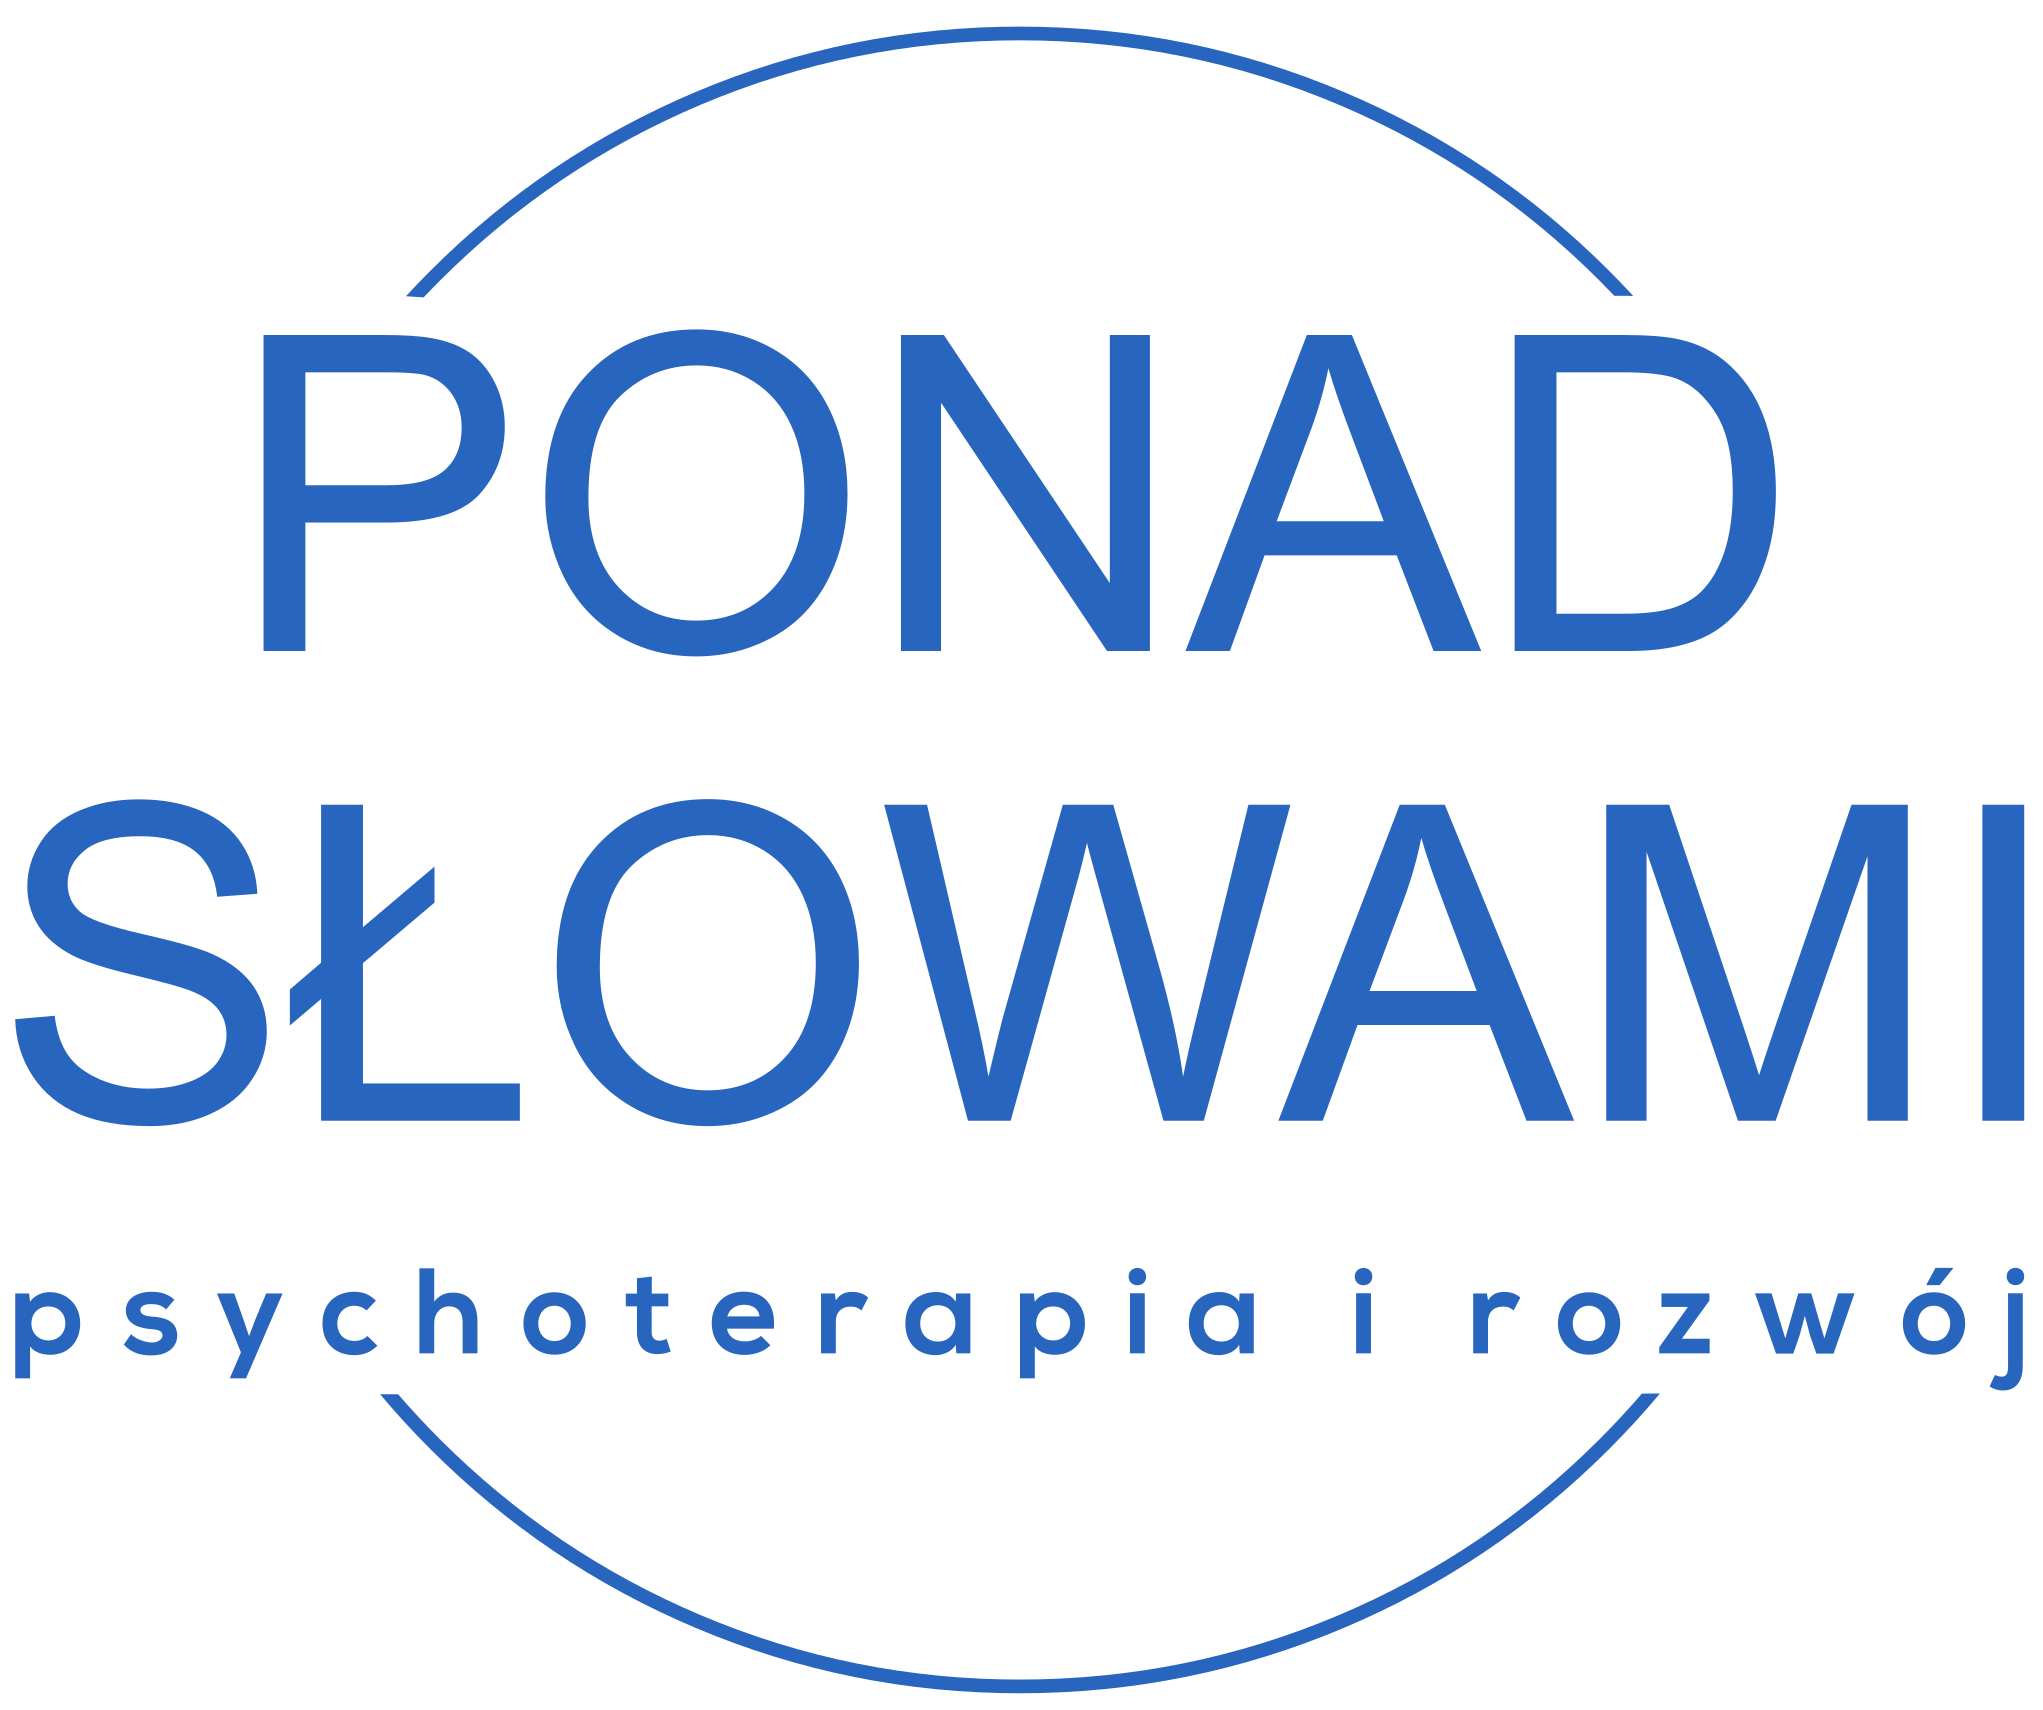 PonadSlowami.pl